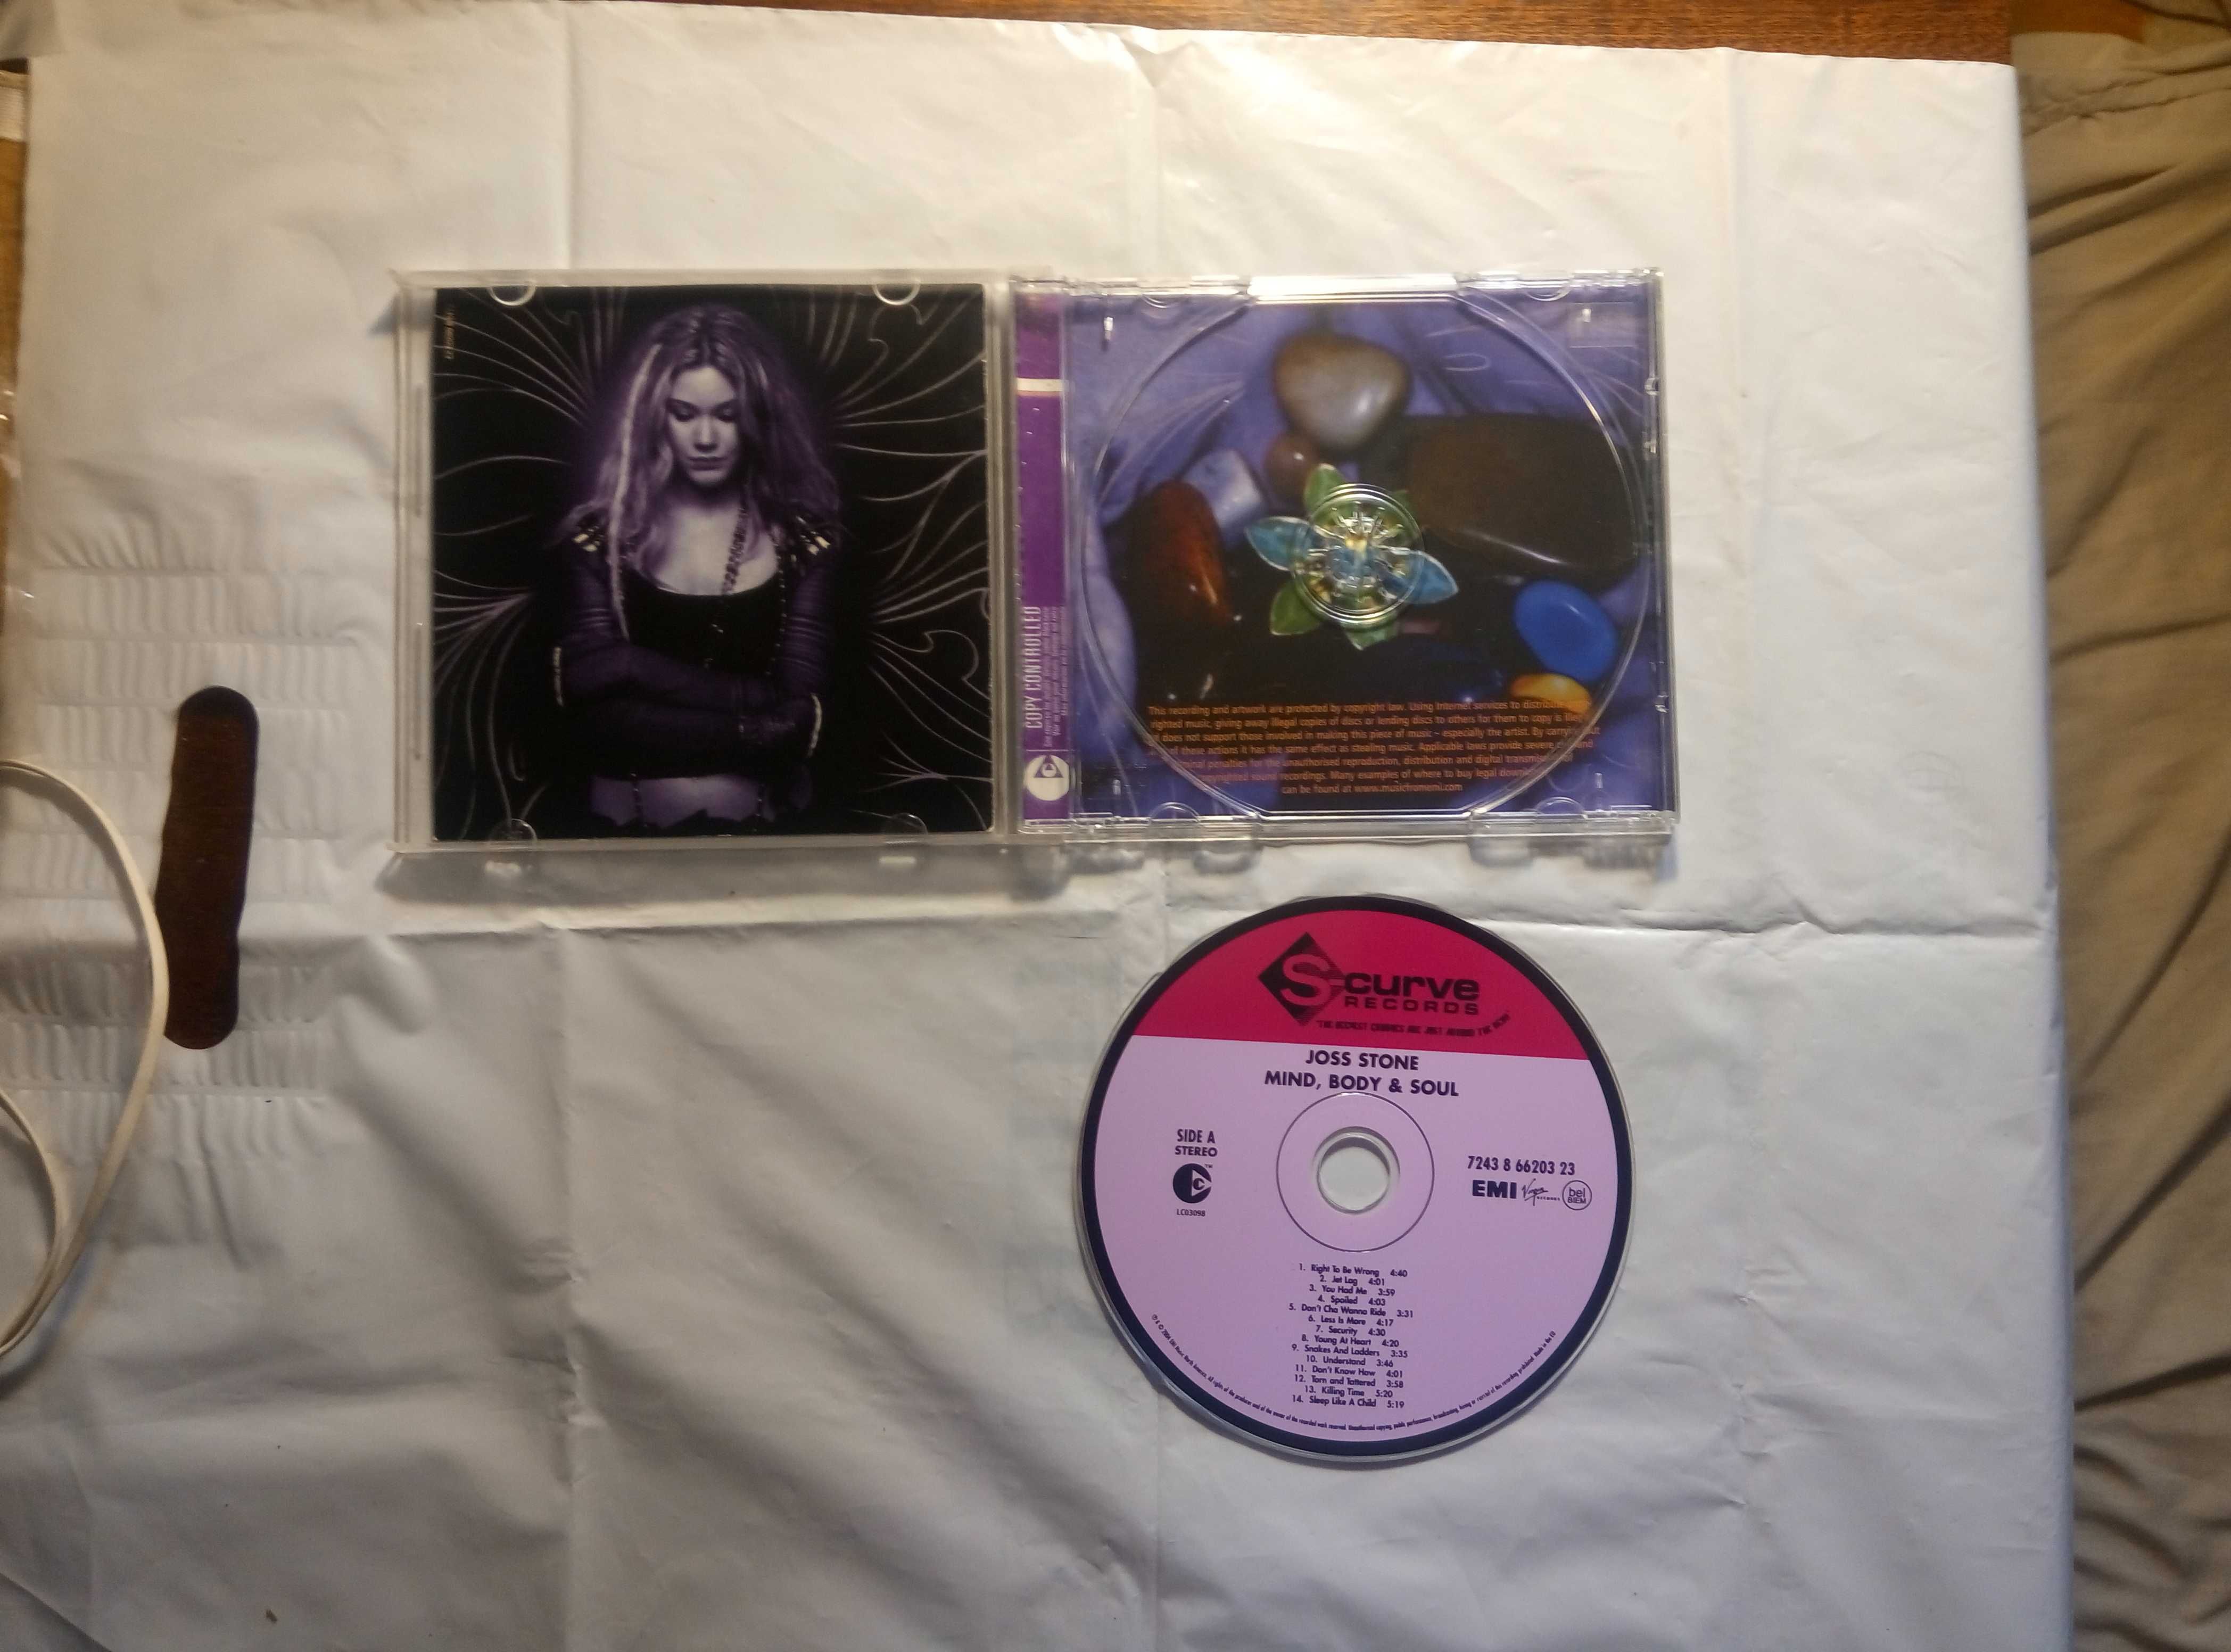 Joss Stone "Mind Body & Soul" фирменный CD диск